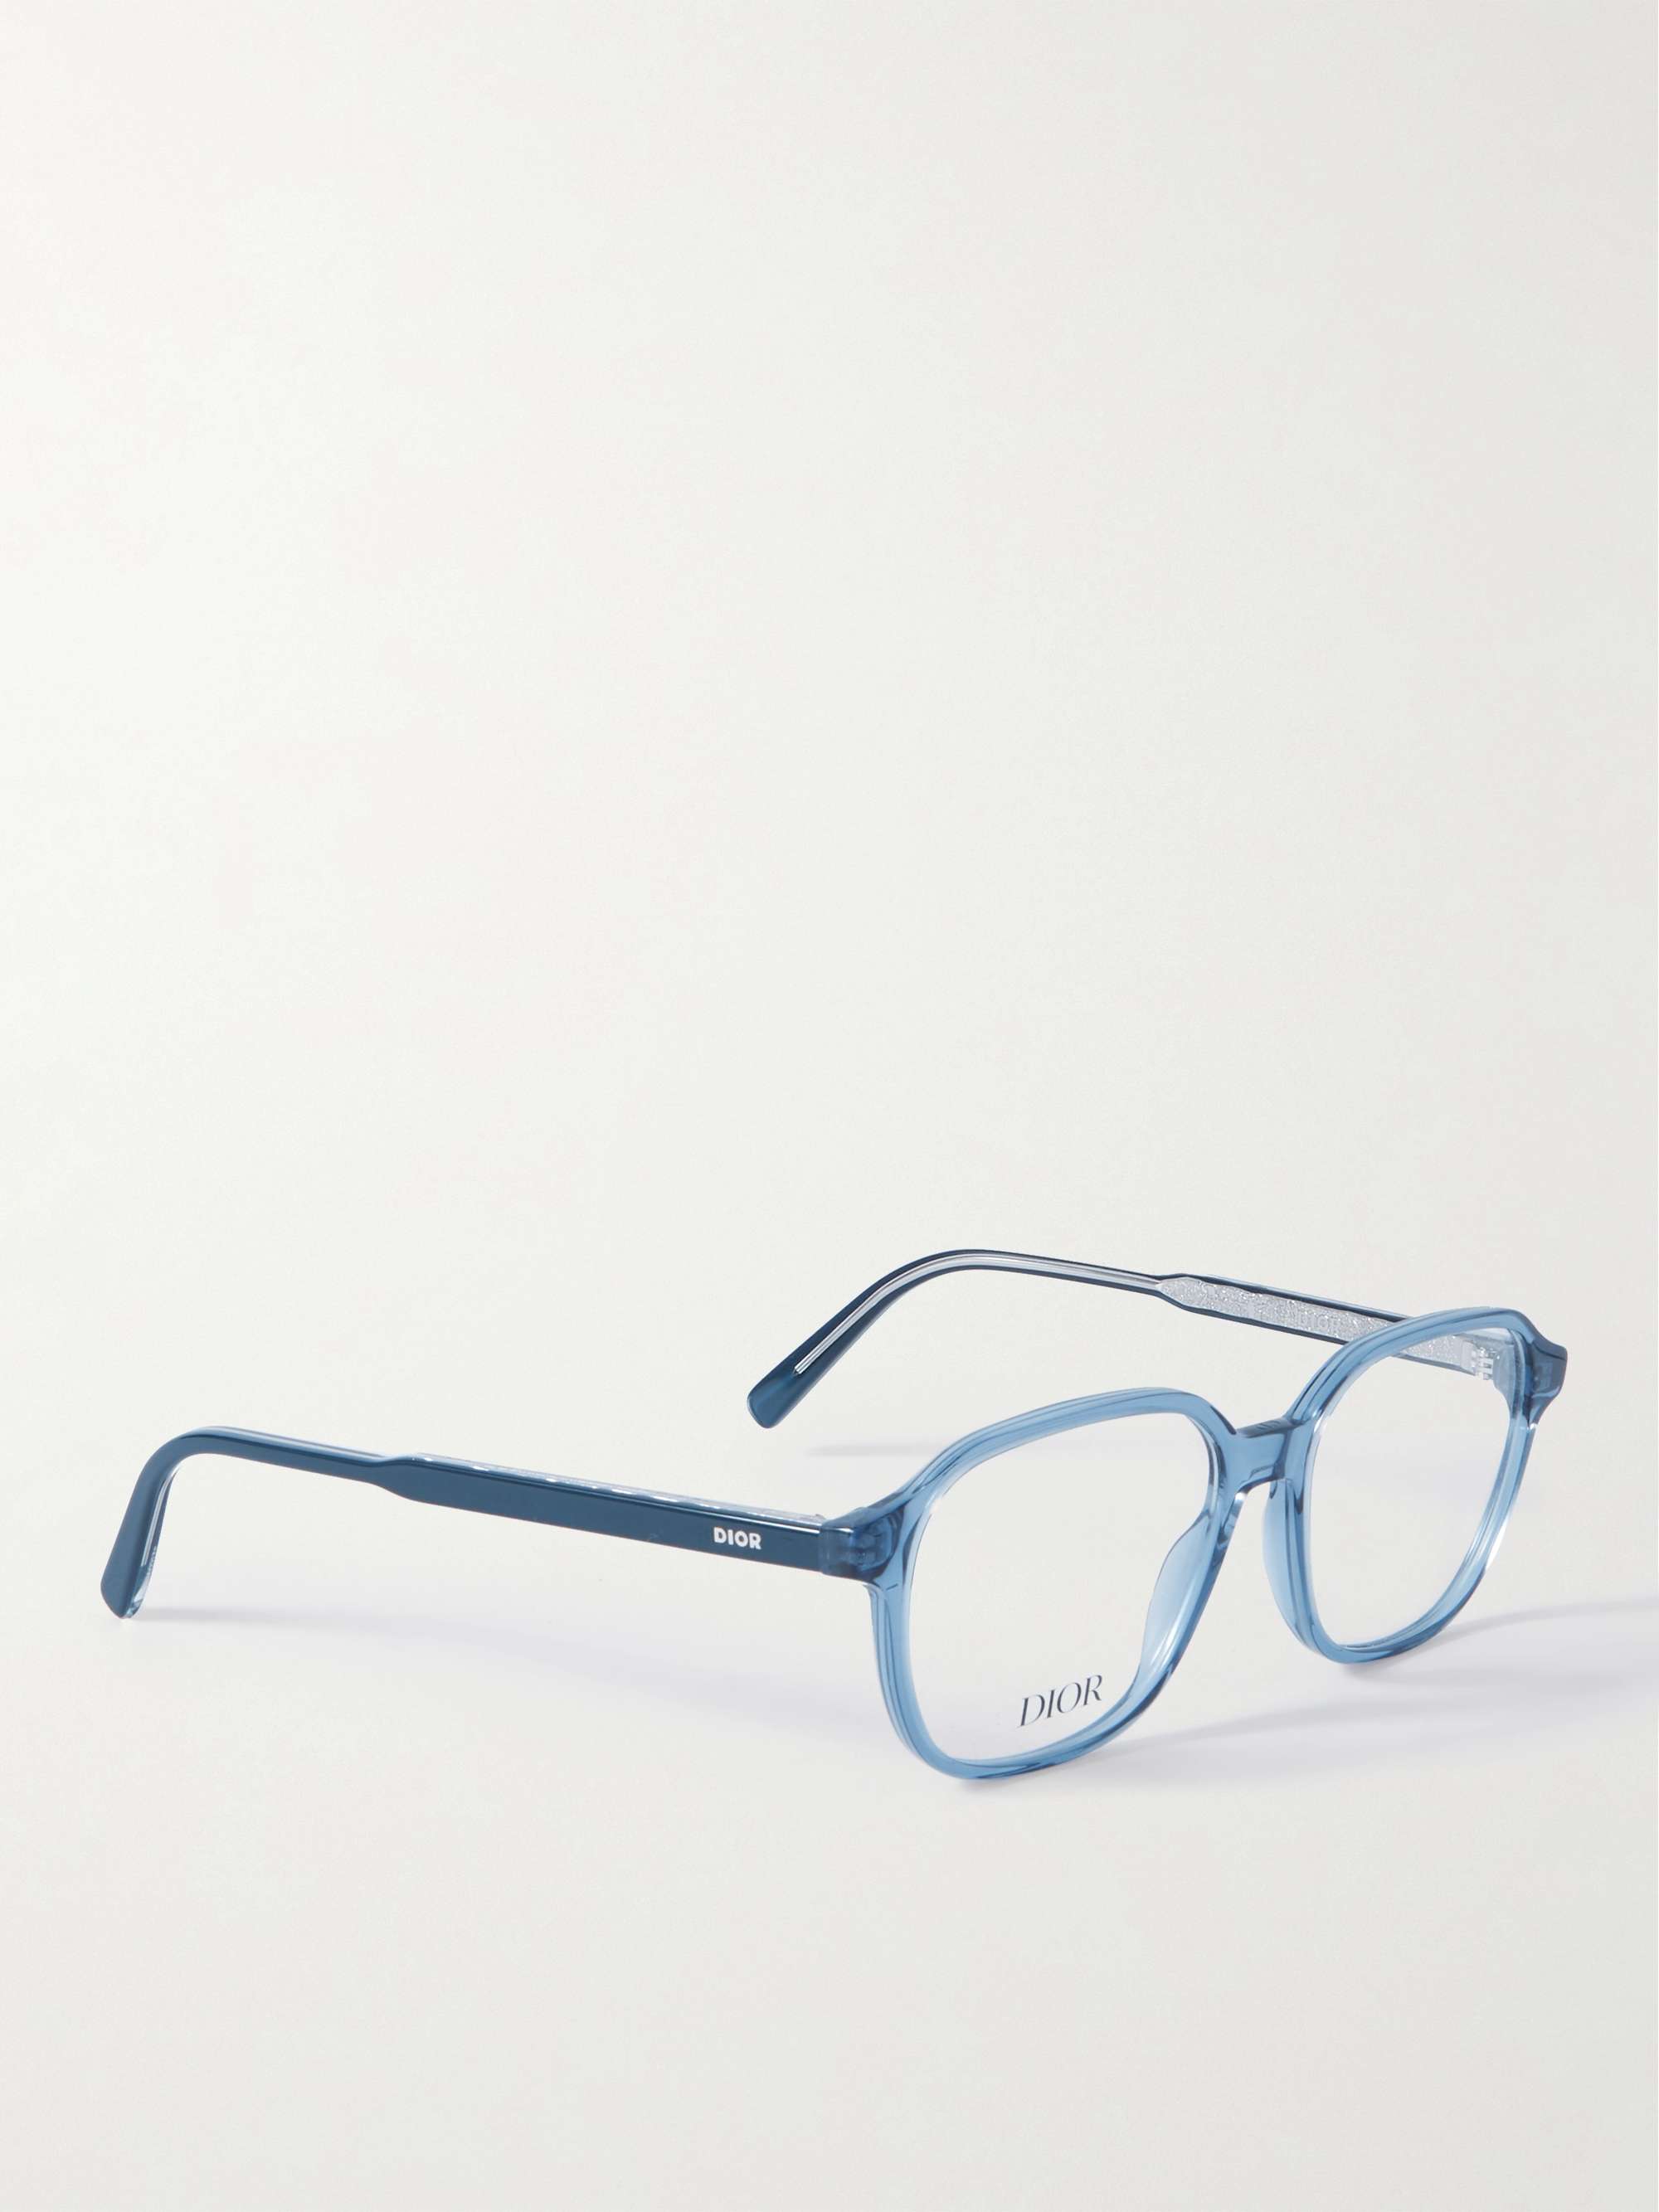 DIOR EYEWEAR InDiorO S3I Square-Frame Tortoiseshell Acetate Optical Glasses